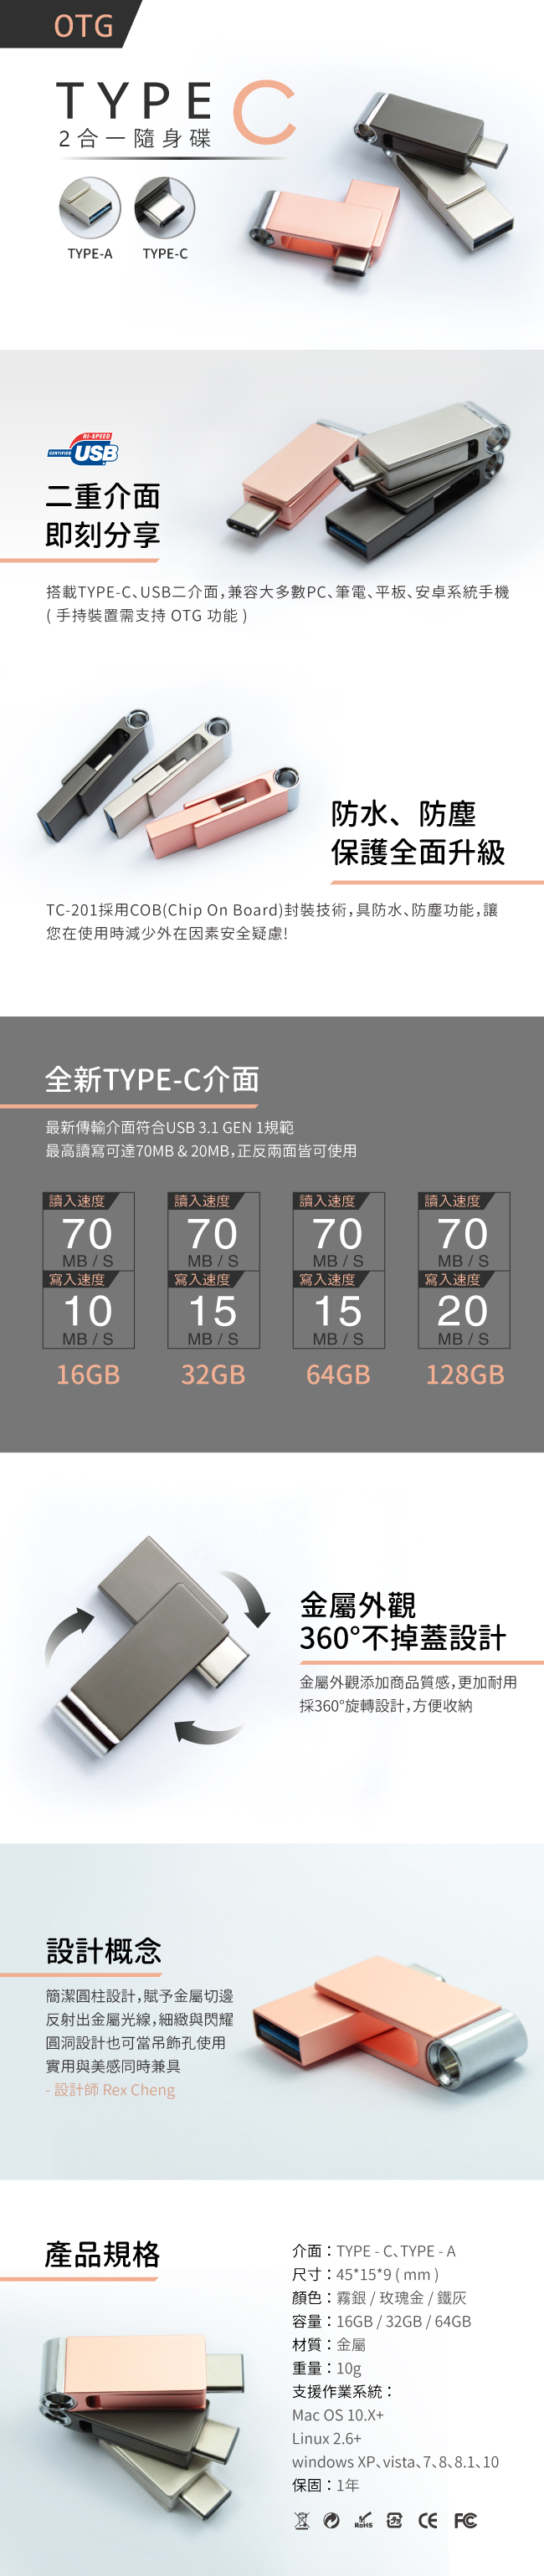 V-smart 高速雙用OTG隨身碟Type C 16GB 霧銀(附珠鍊)